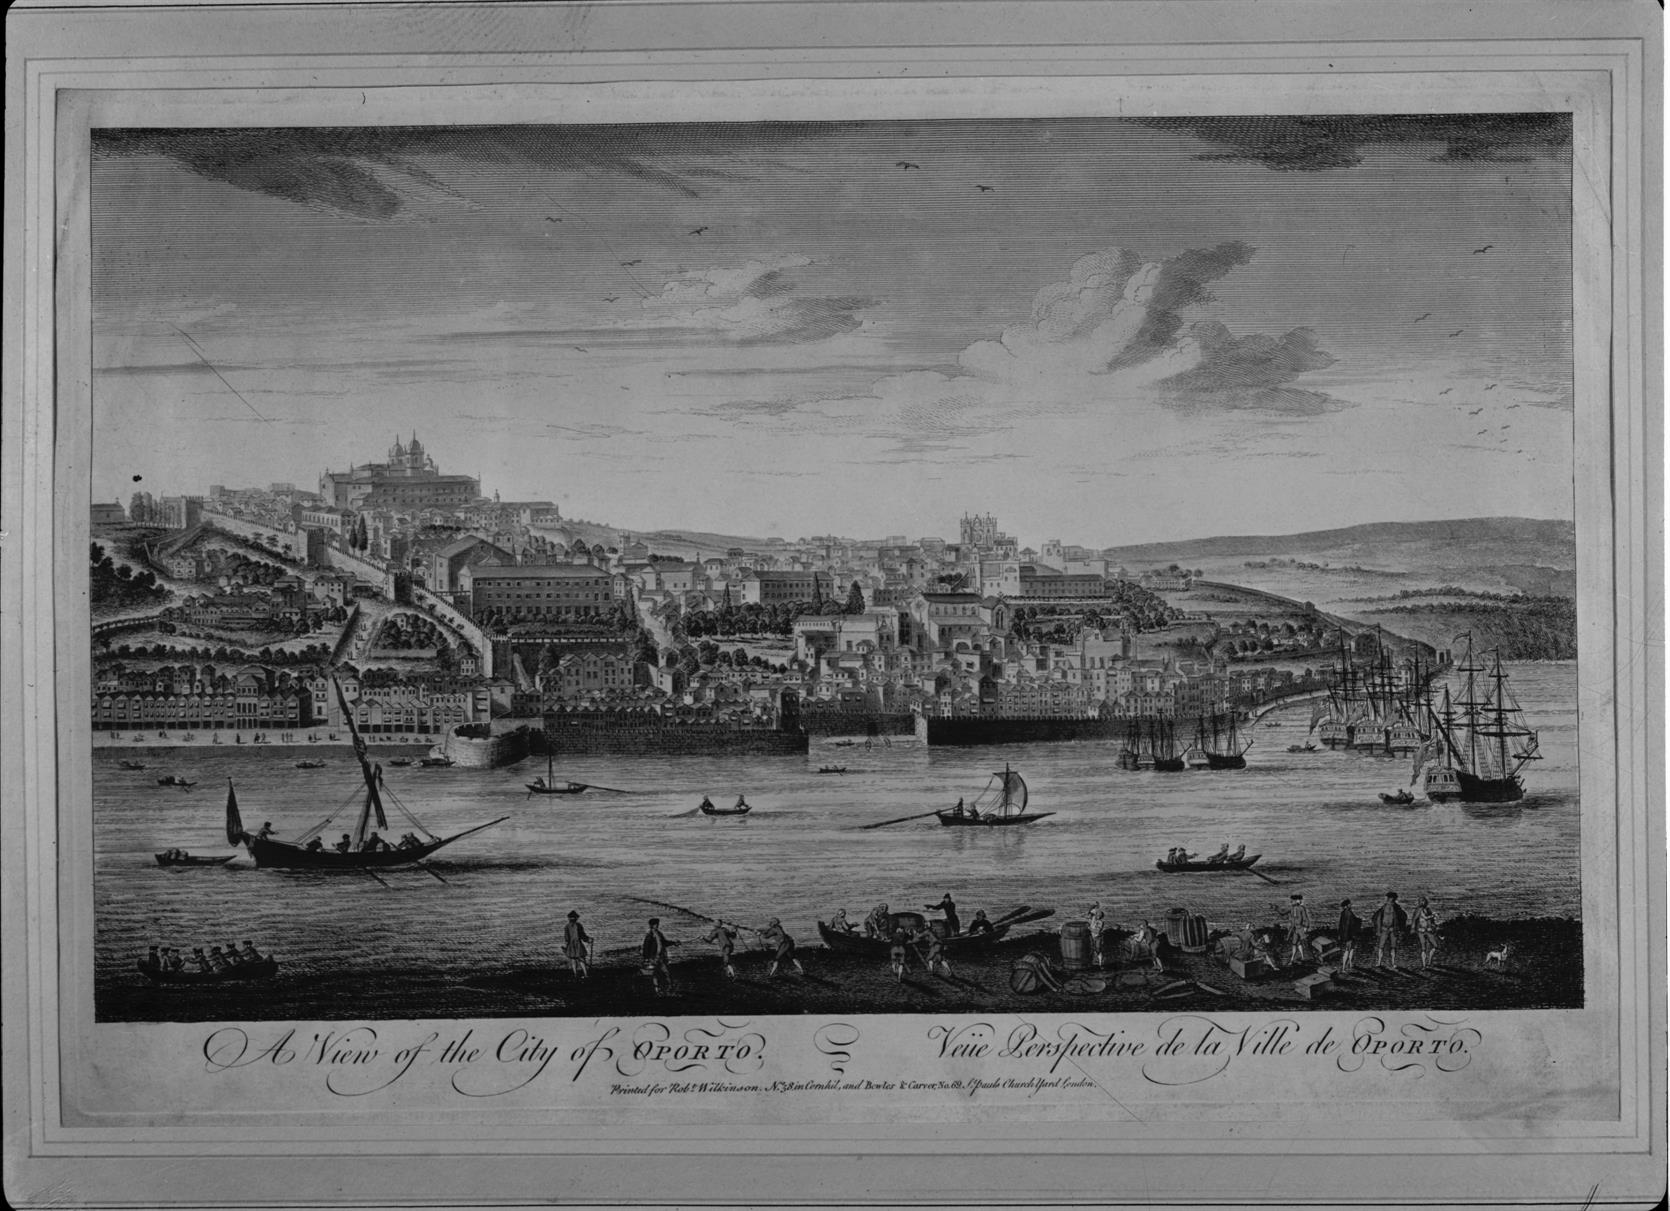 O rio e o mar na vida da cidade : A view of the City of Oporto = Vue perspective de la Ville de Oporto = Vista da Cidade do Porto